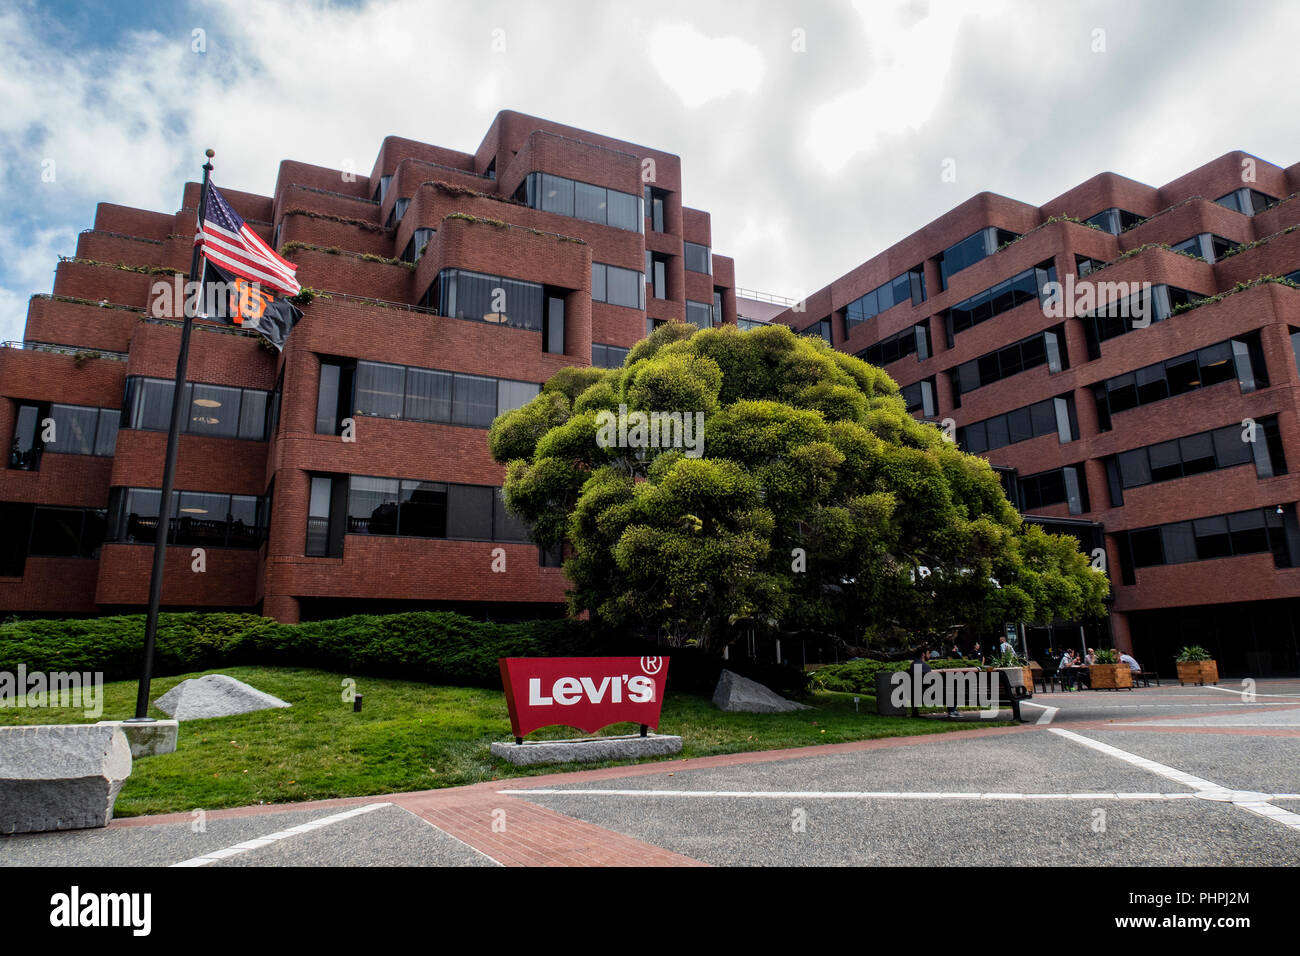 La Levi Strauss e Co sede centrale globale a Levi's Plazza, San Francisco  Foto stock - Alamy